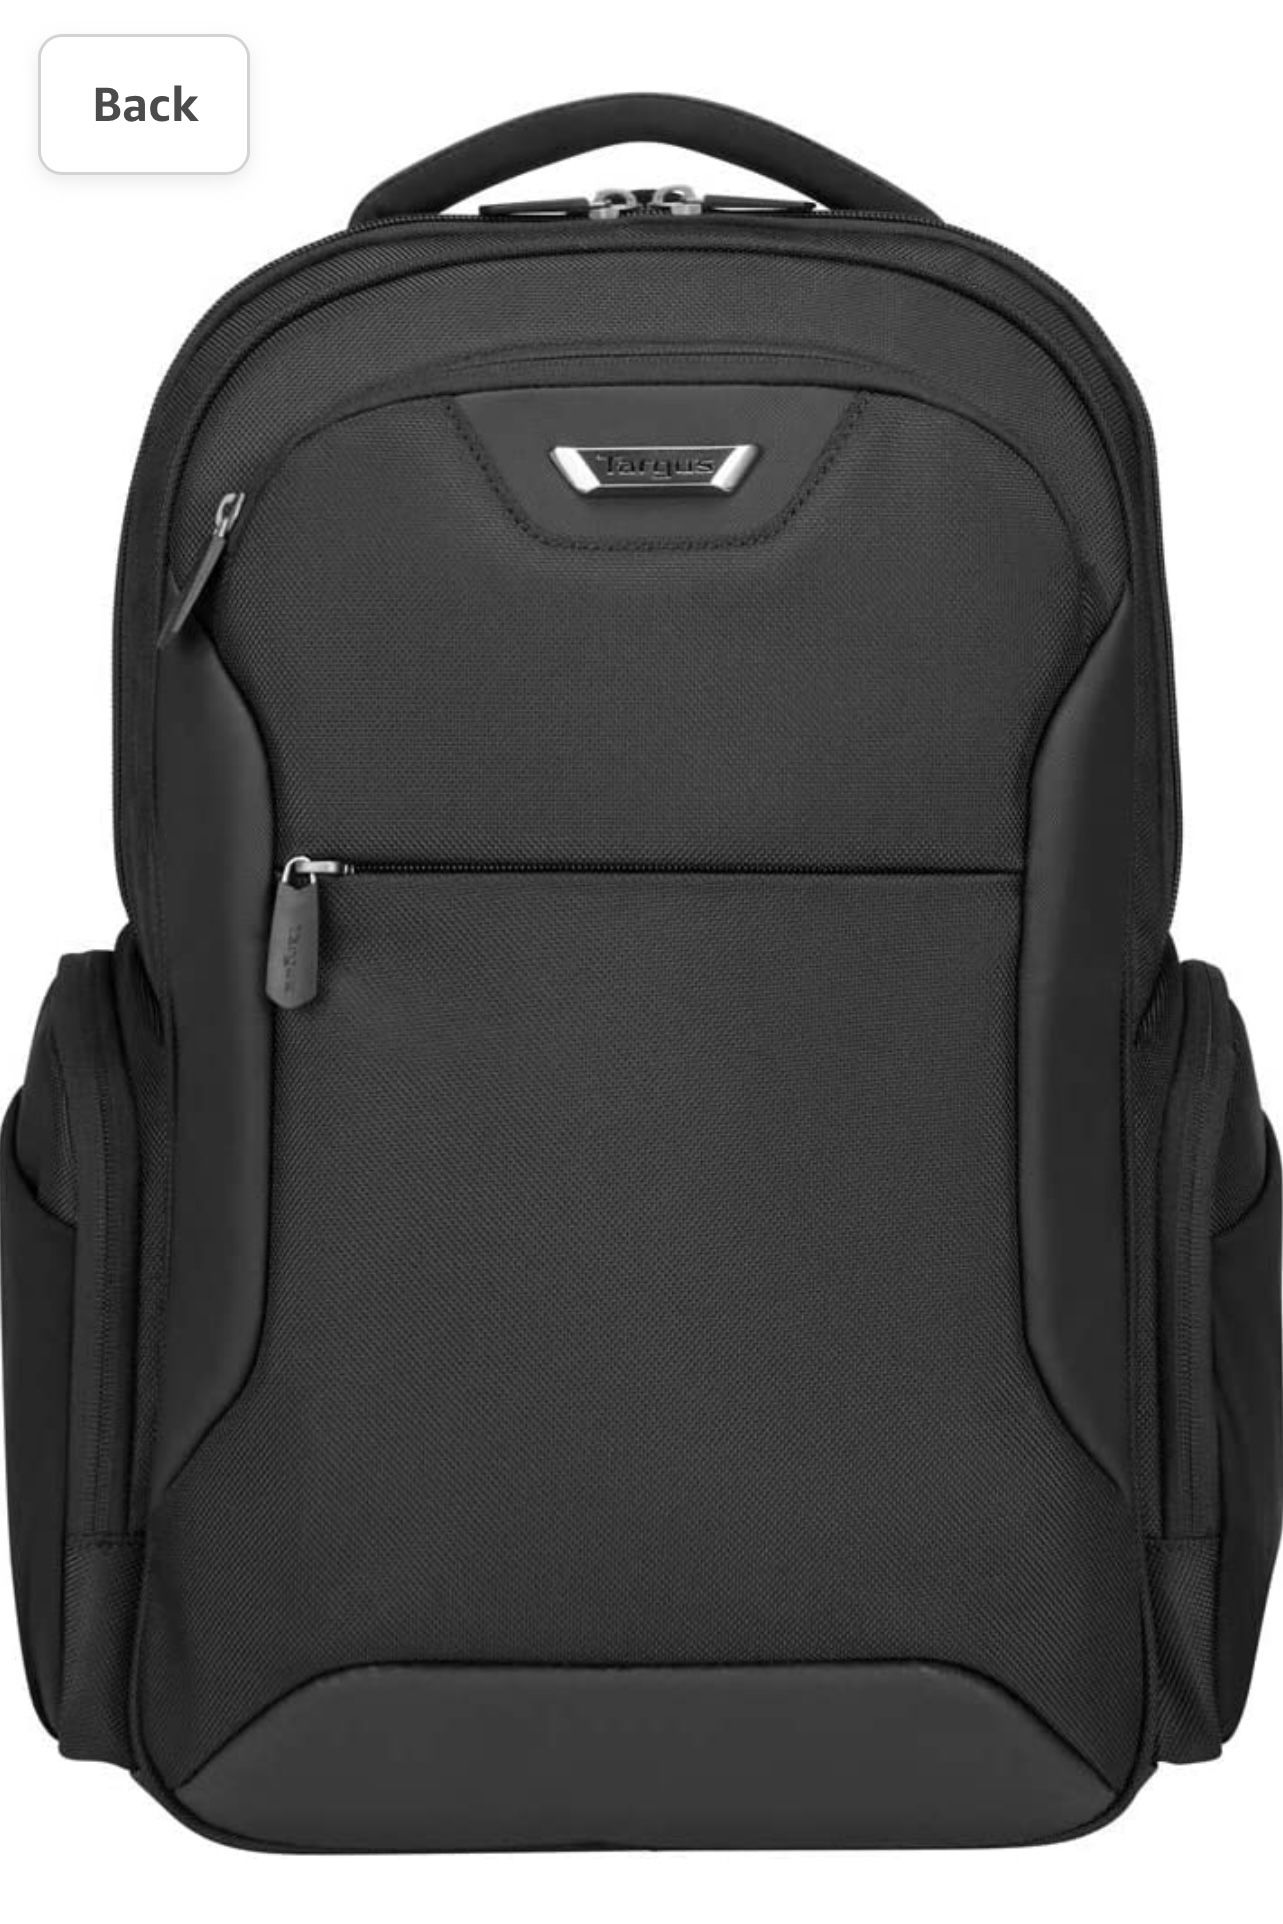 Targus Corporate Traveler Laptop Backpack